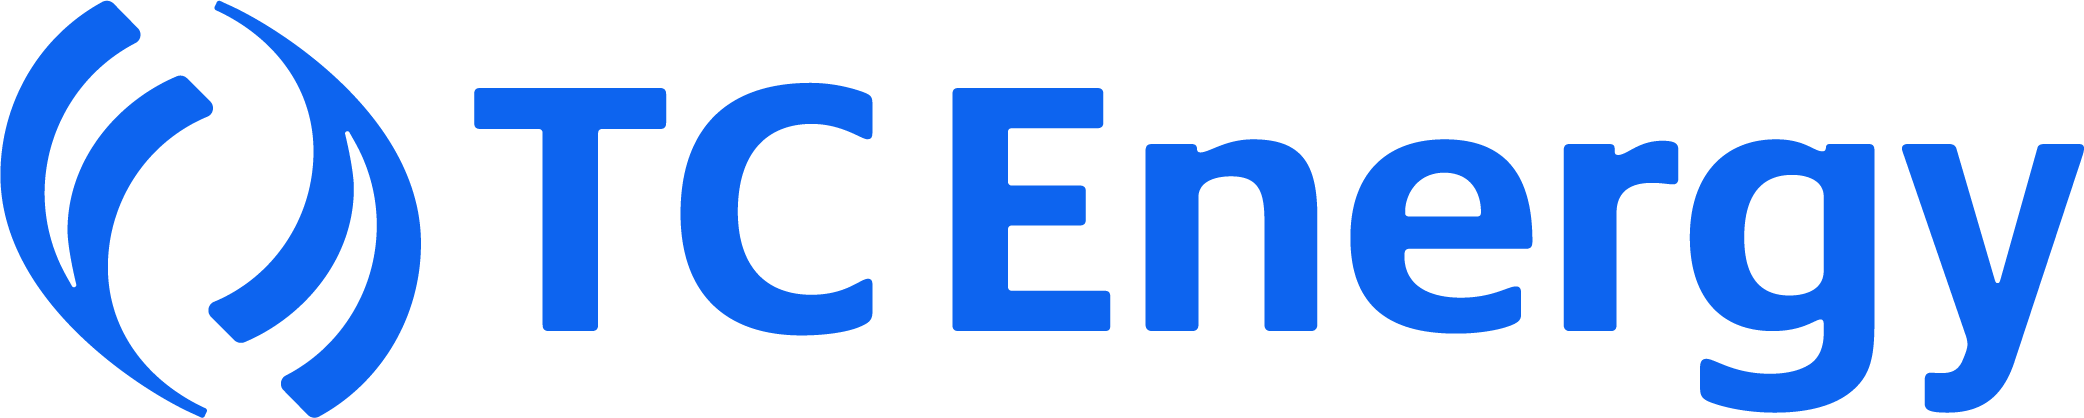 Logo En Tceblue (1)